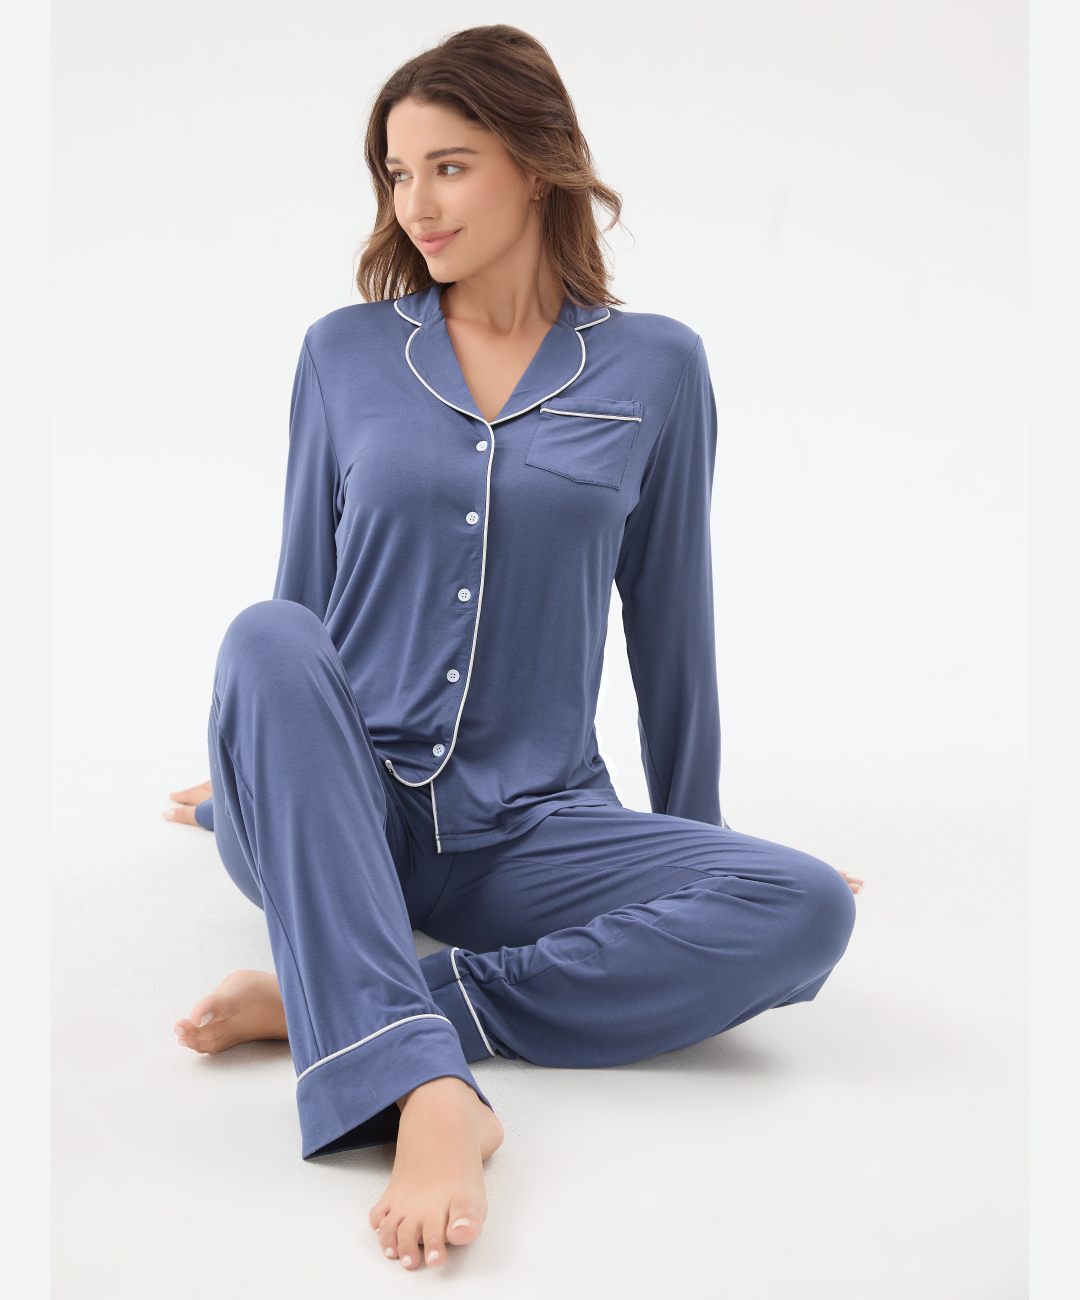 Cool Jammies Bamboo Cooling Long Sleeve Sleepwear Pajama Set